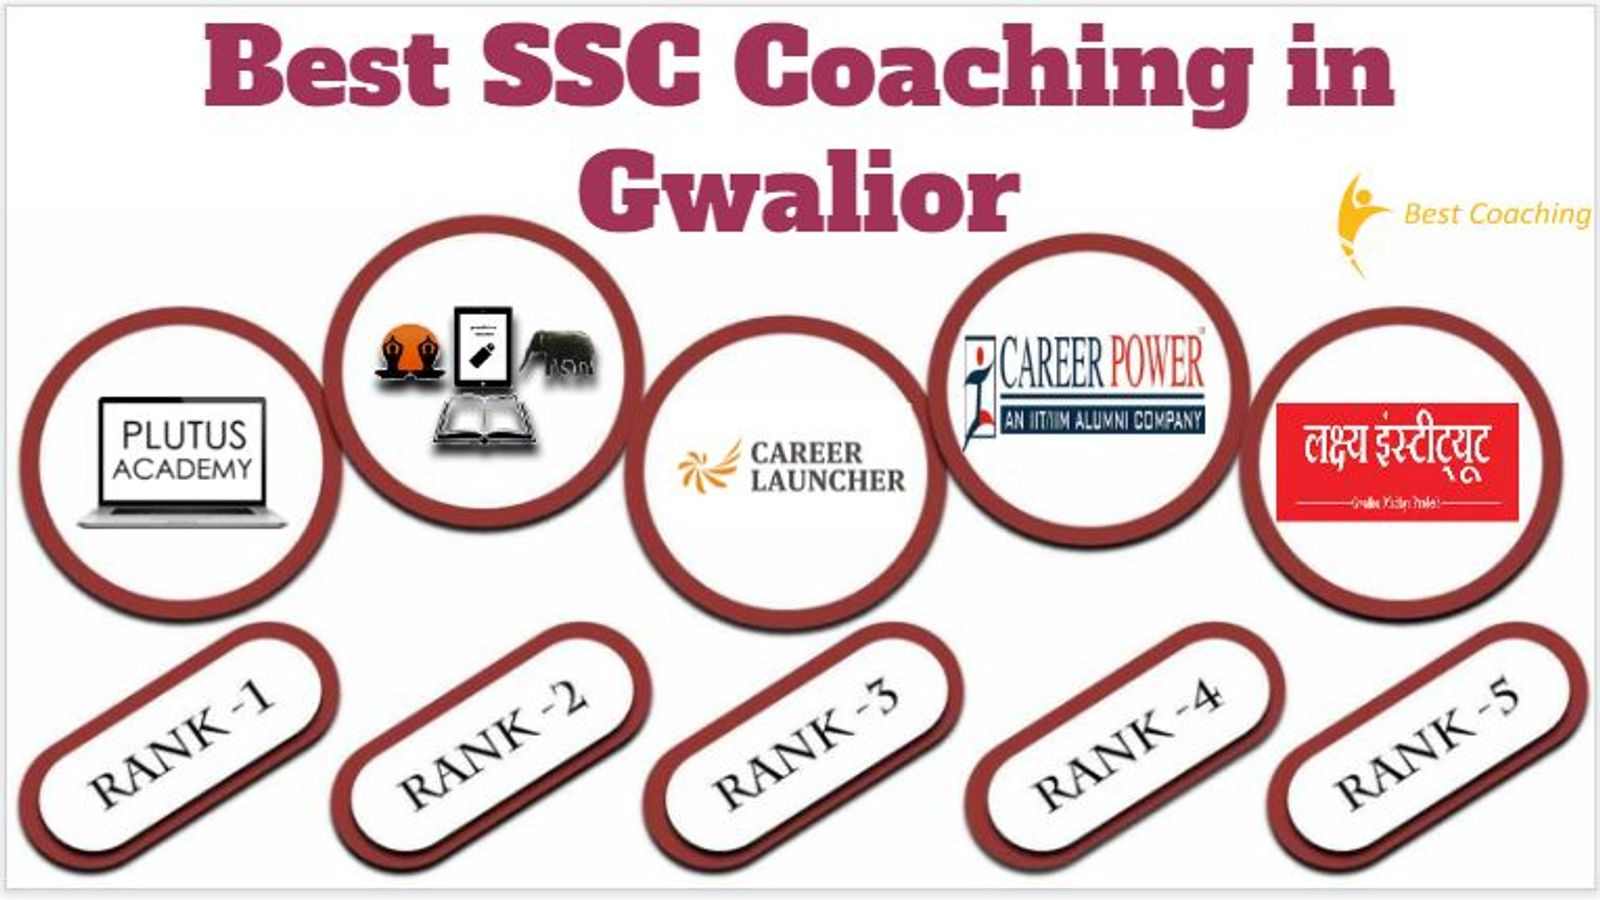 Best SSC Coaching in Gwalior